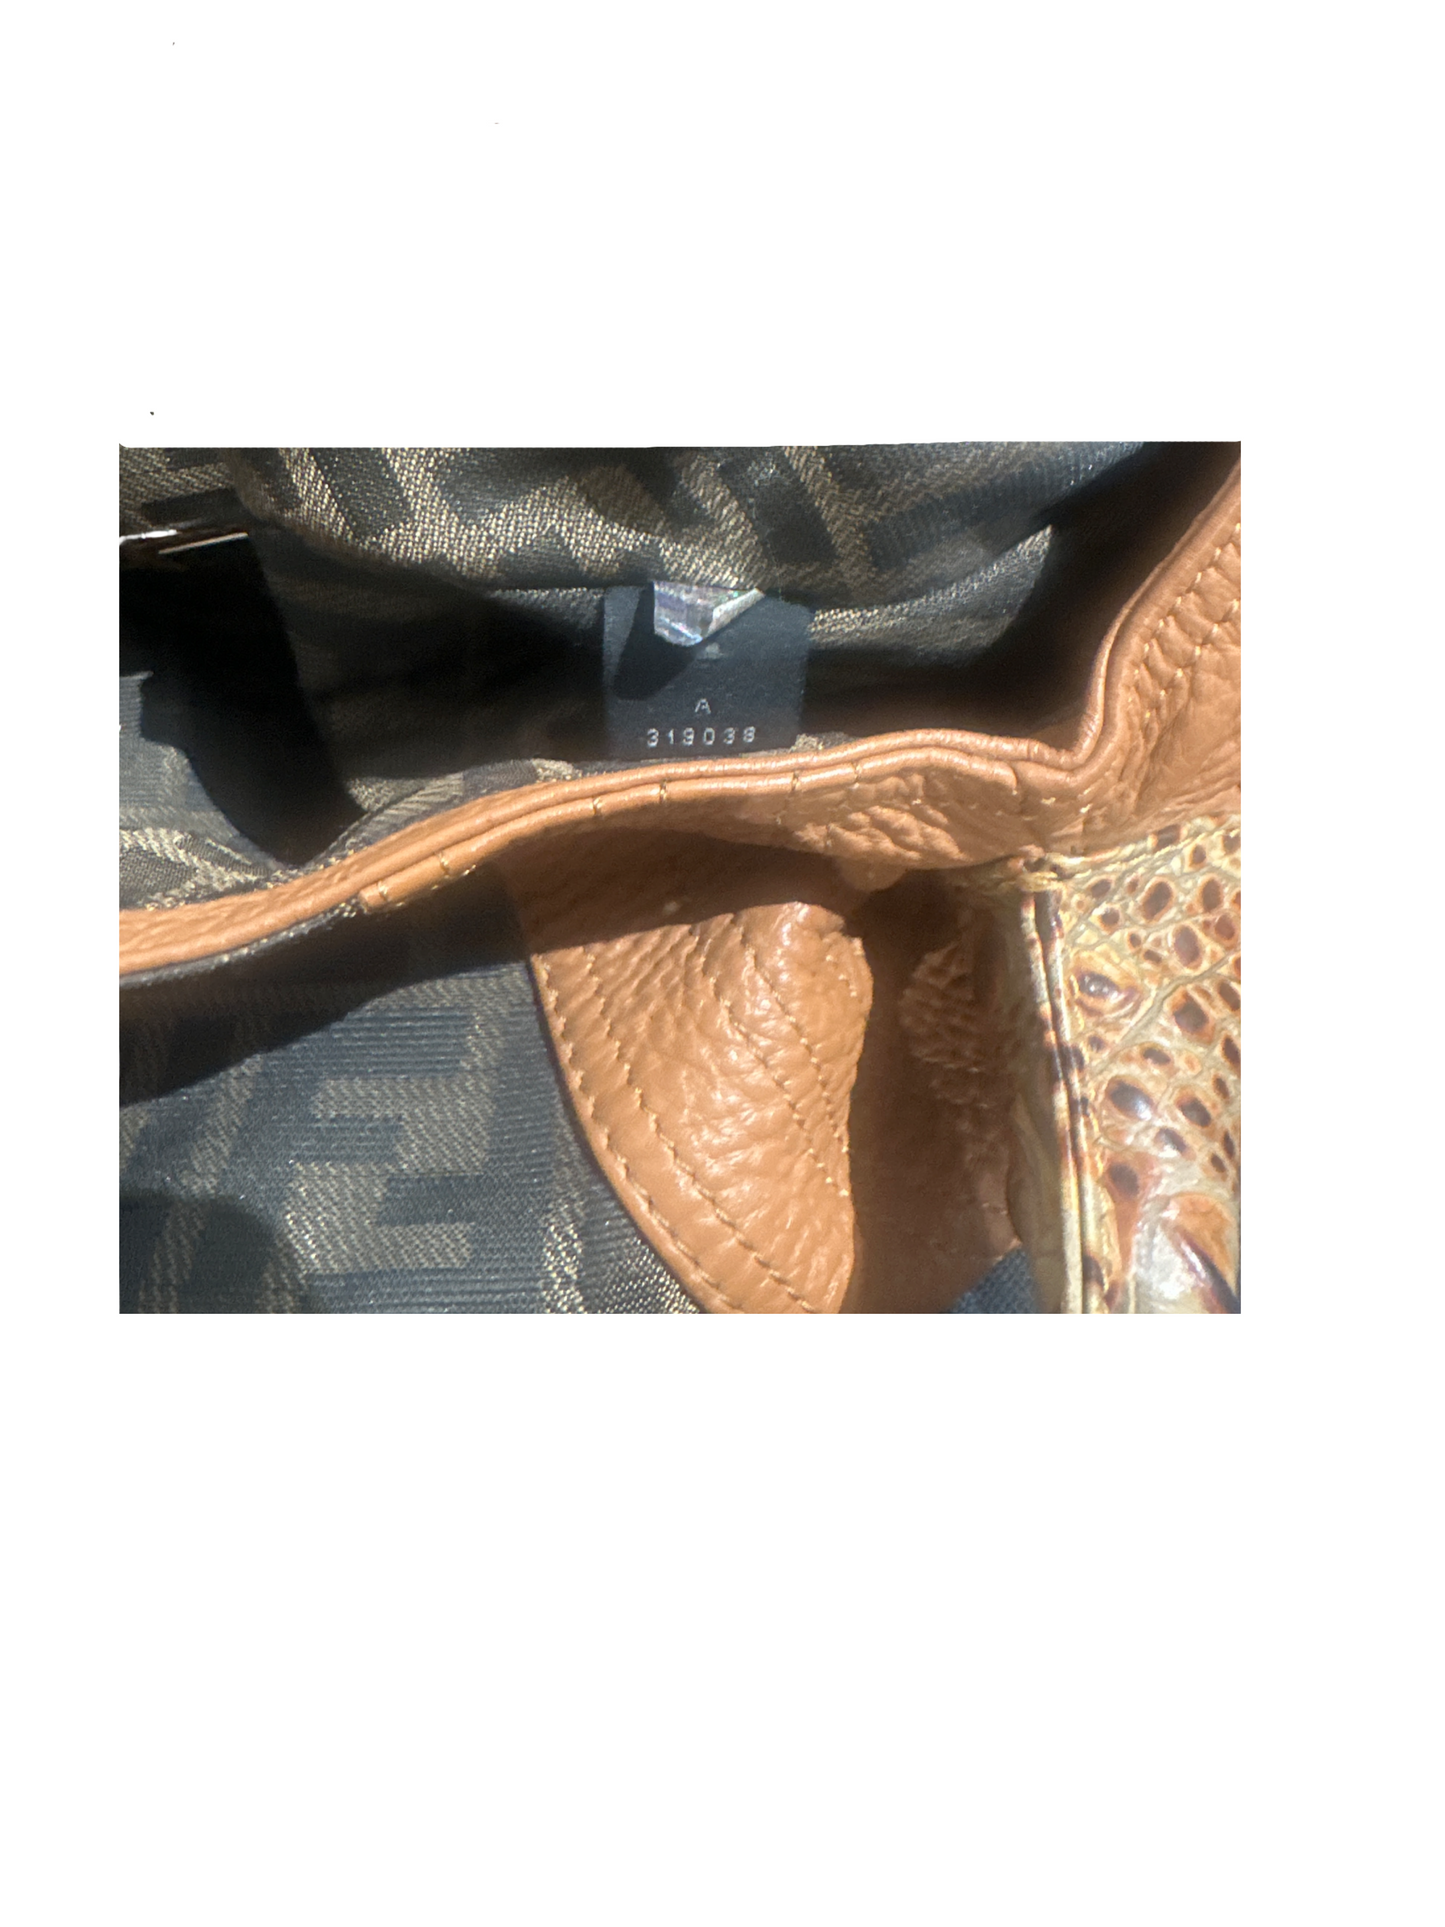 Fendi Spy Bag Zucca Canvas and Leather Medium Handbag Monogram